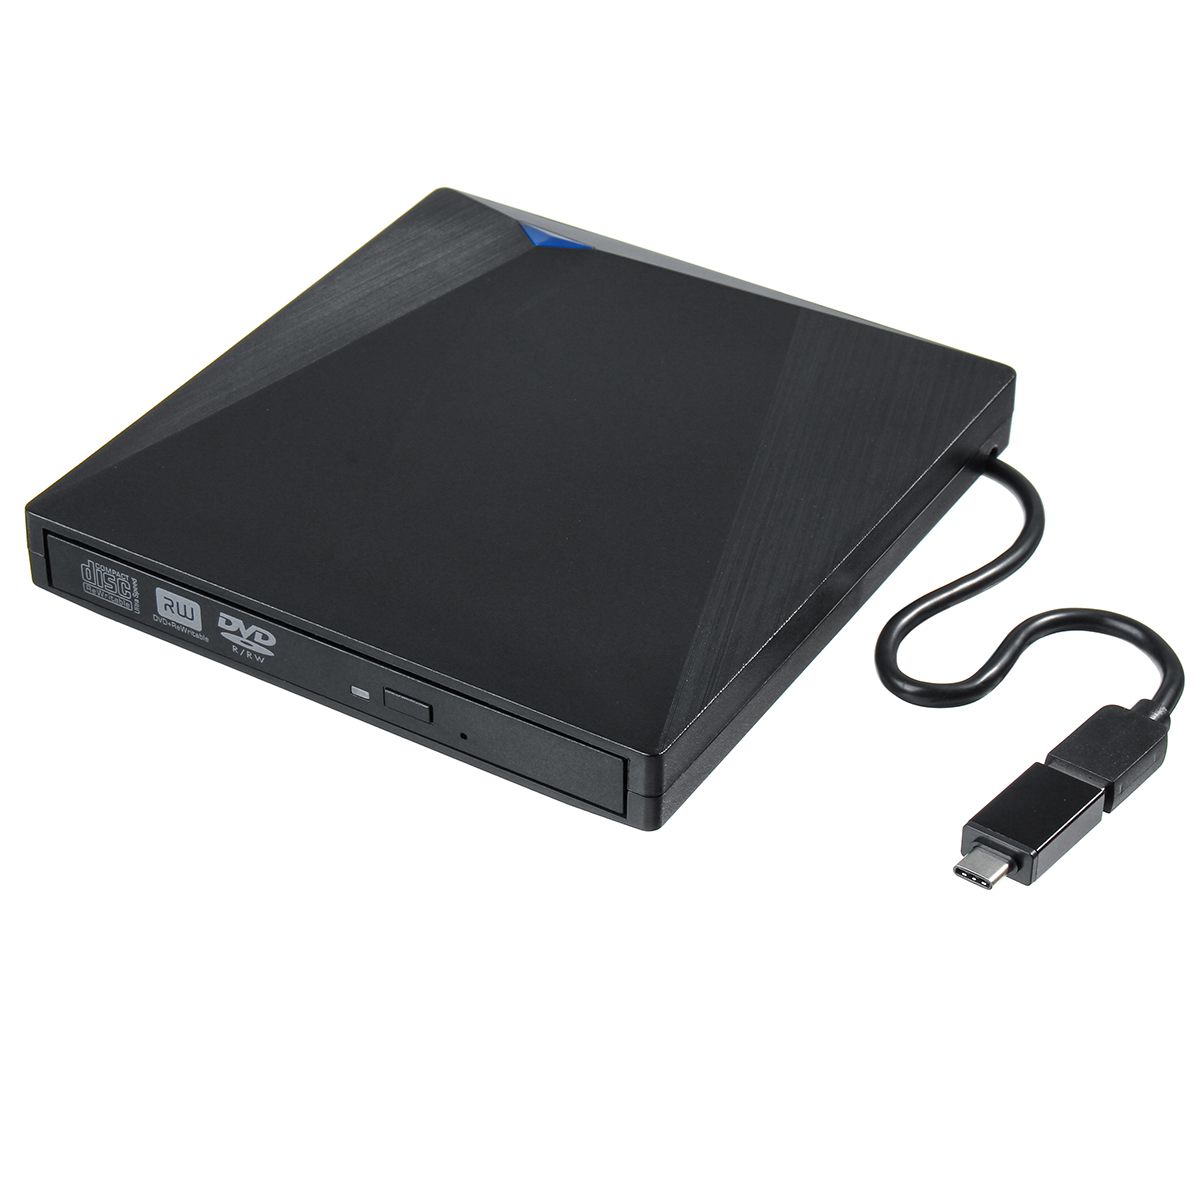 Type-C-USB-30-External-DVD-Burner-Writer-Recorder-Player-DVD-RW-Optical-Drive-CDDVD-ROM-Player-for-L-1710613-10